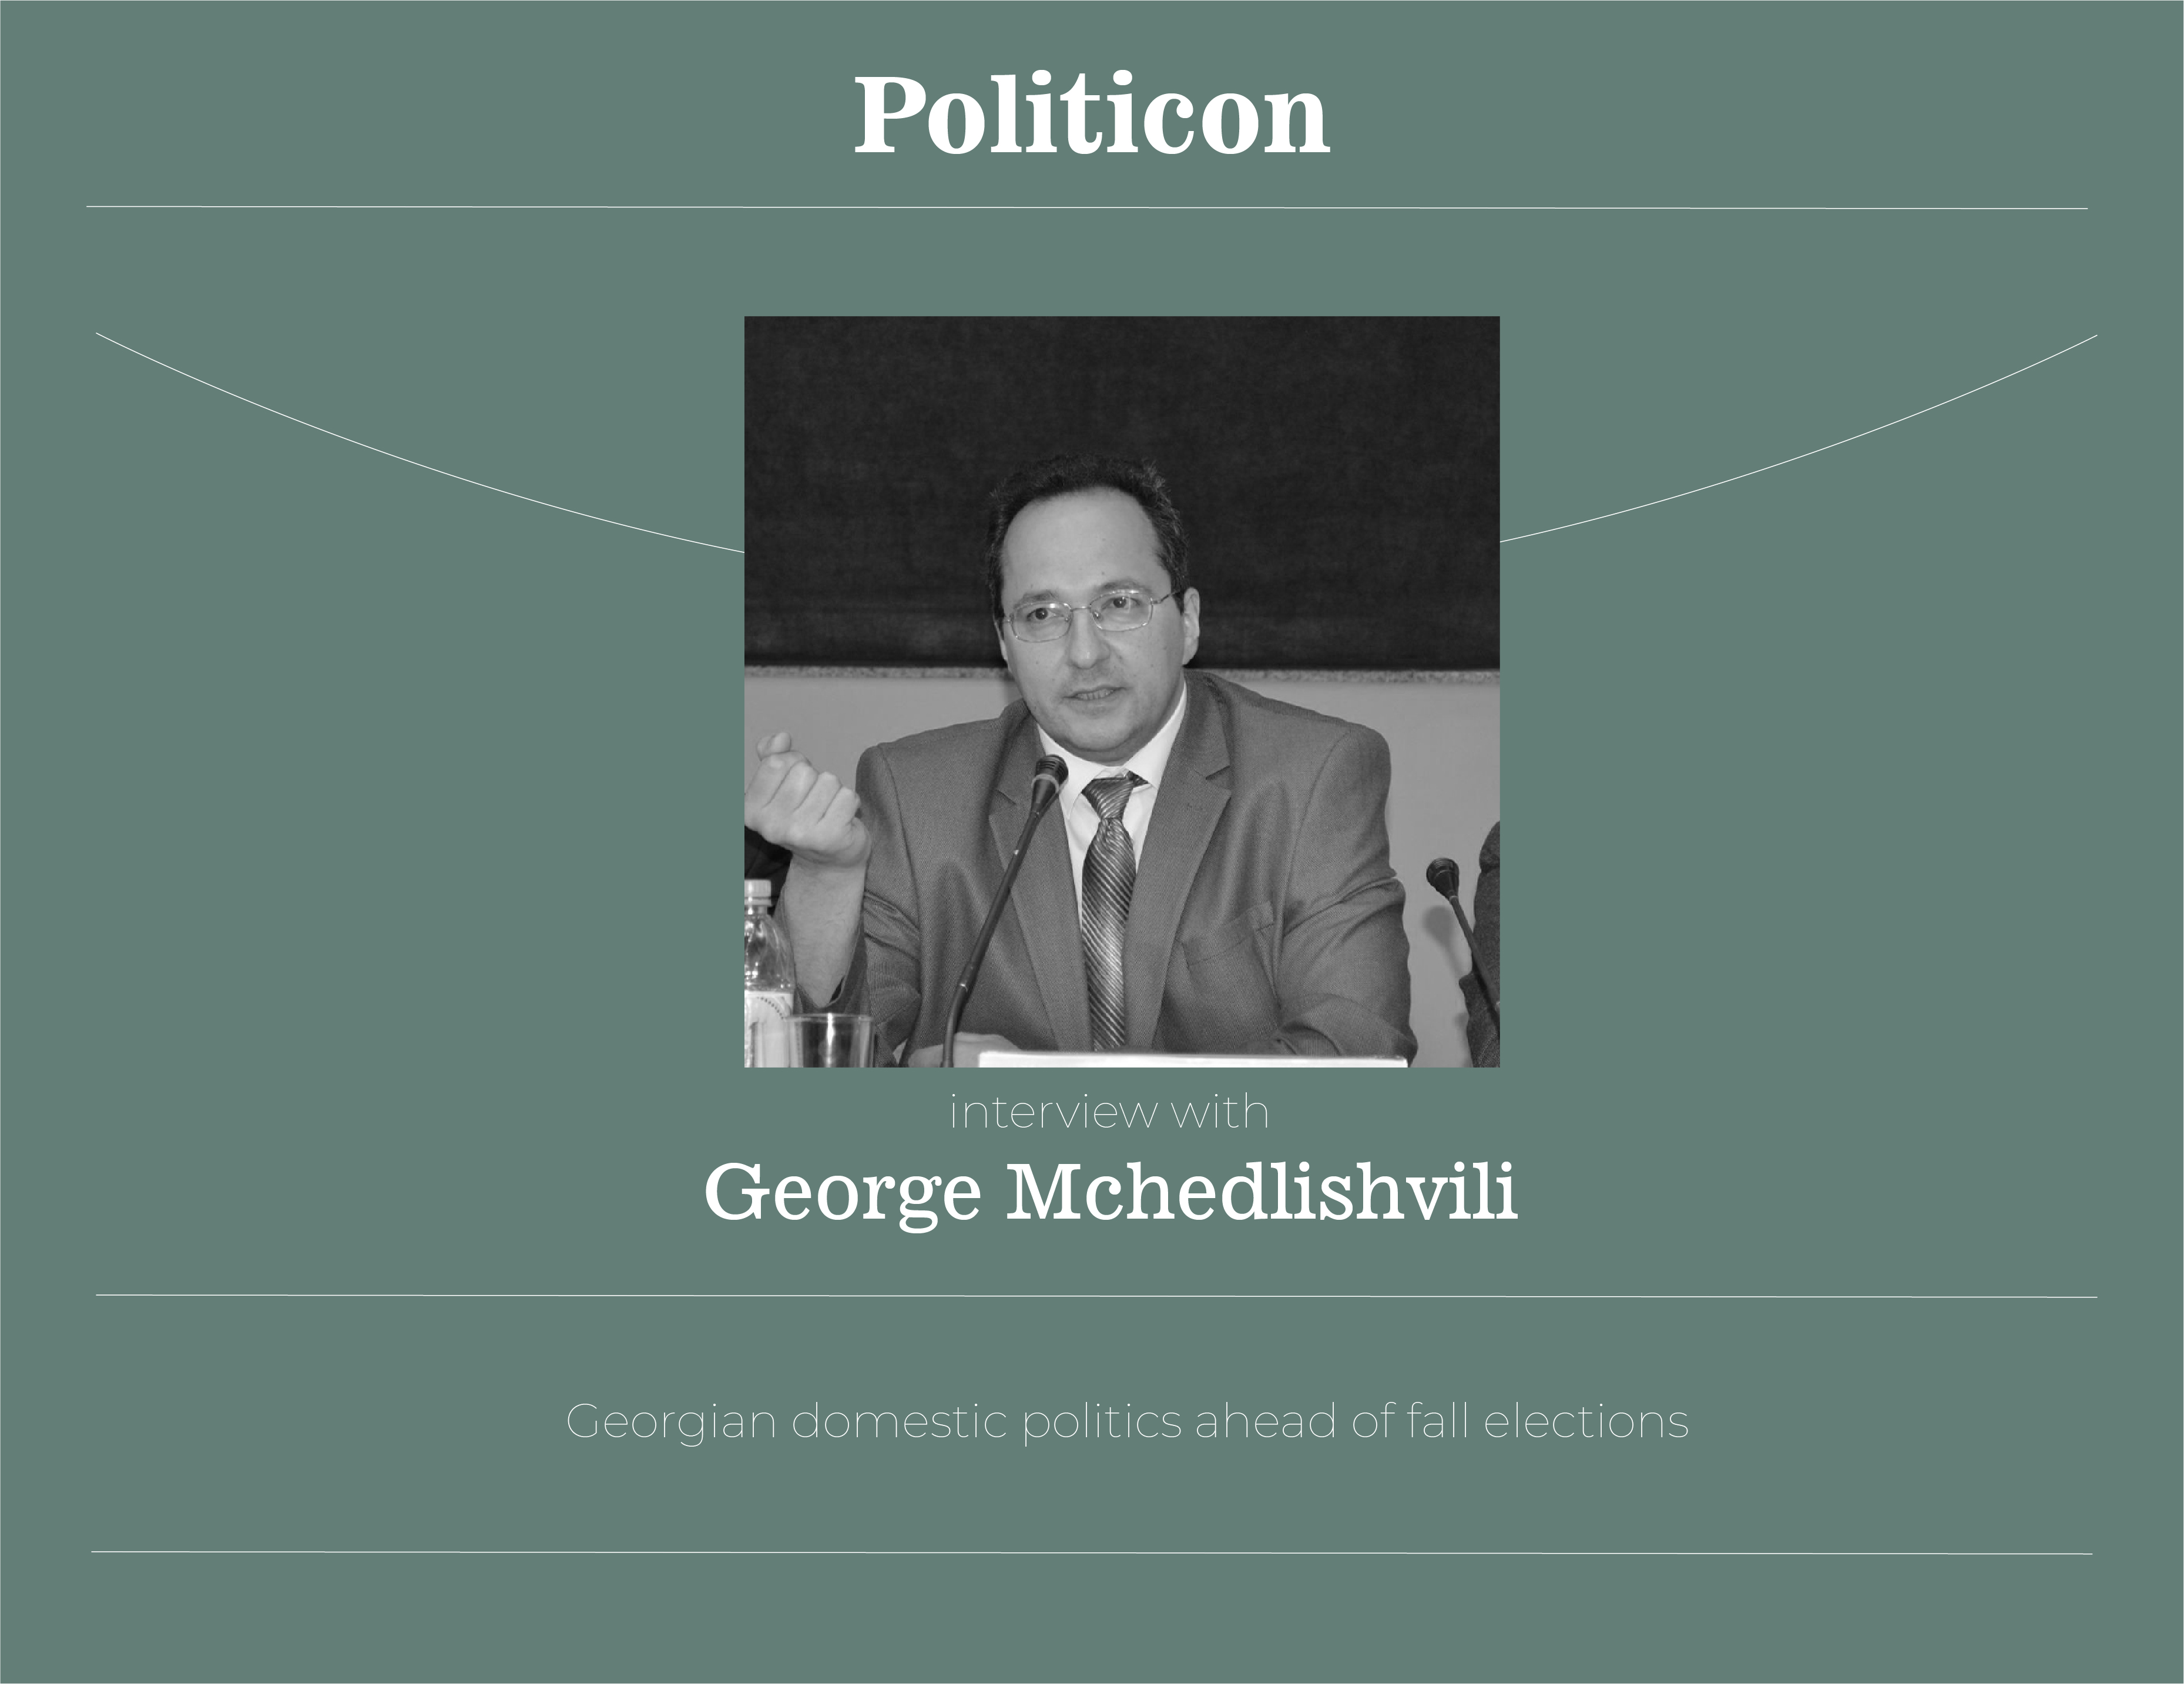 Georgian domestic politics ahead of fall elections